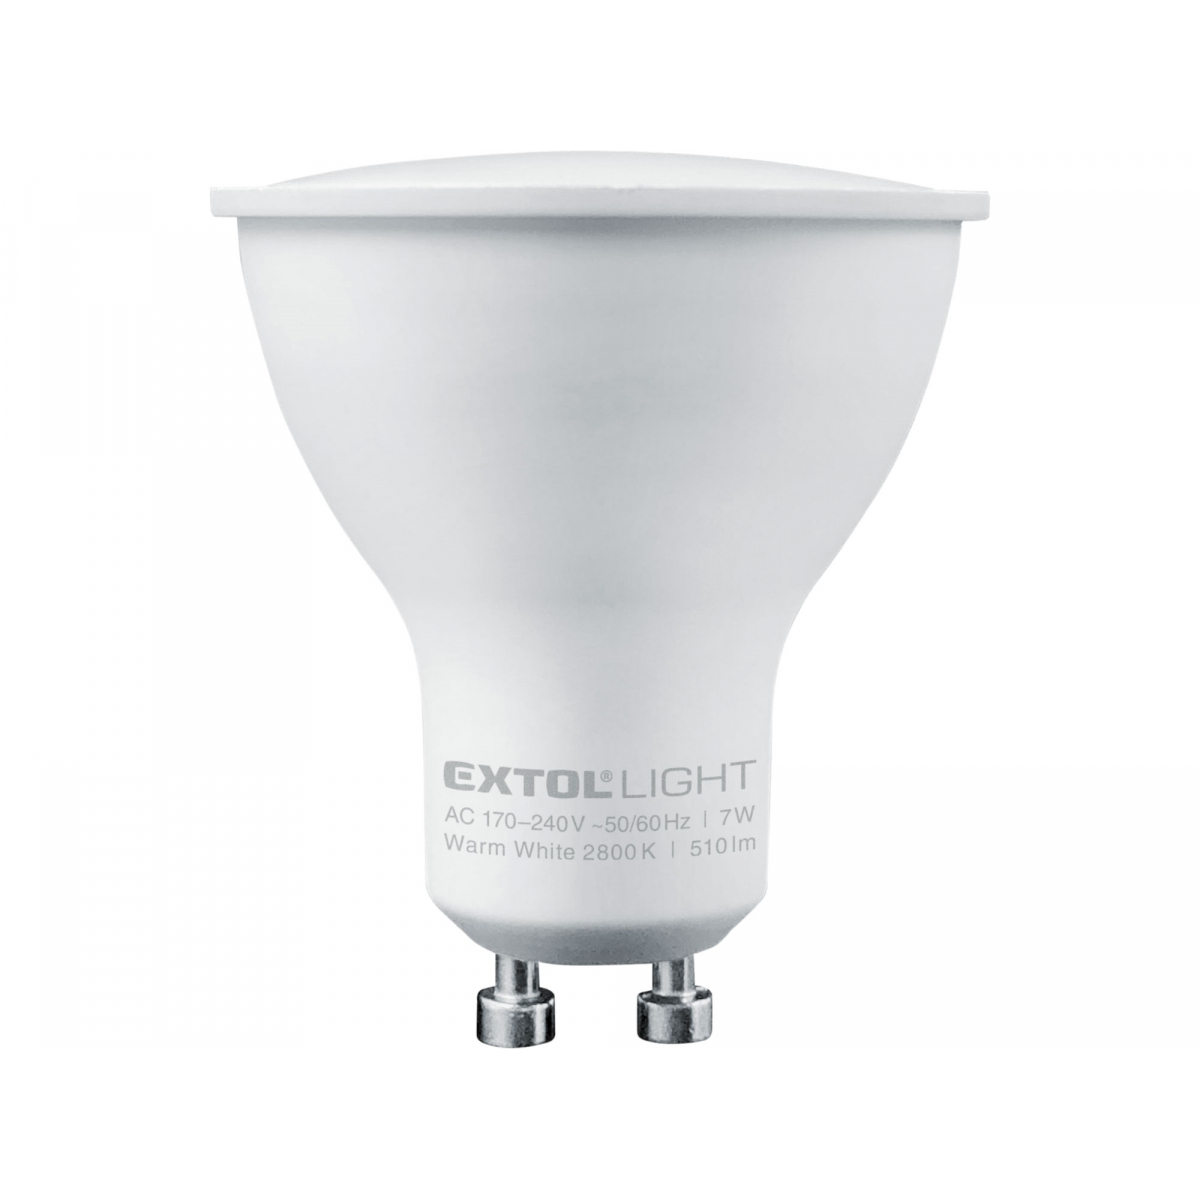 EXTOL LIGHT žárovka LED reflektorová, 7W, 510lm, GU10, teplá bílá